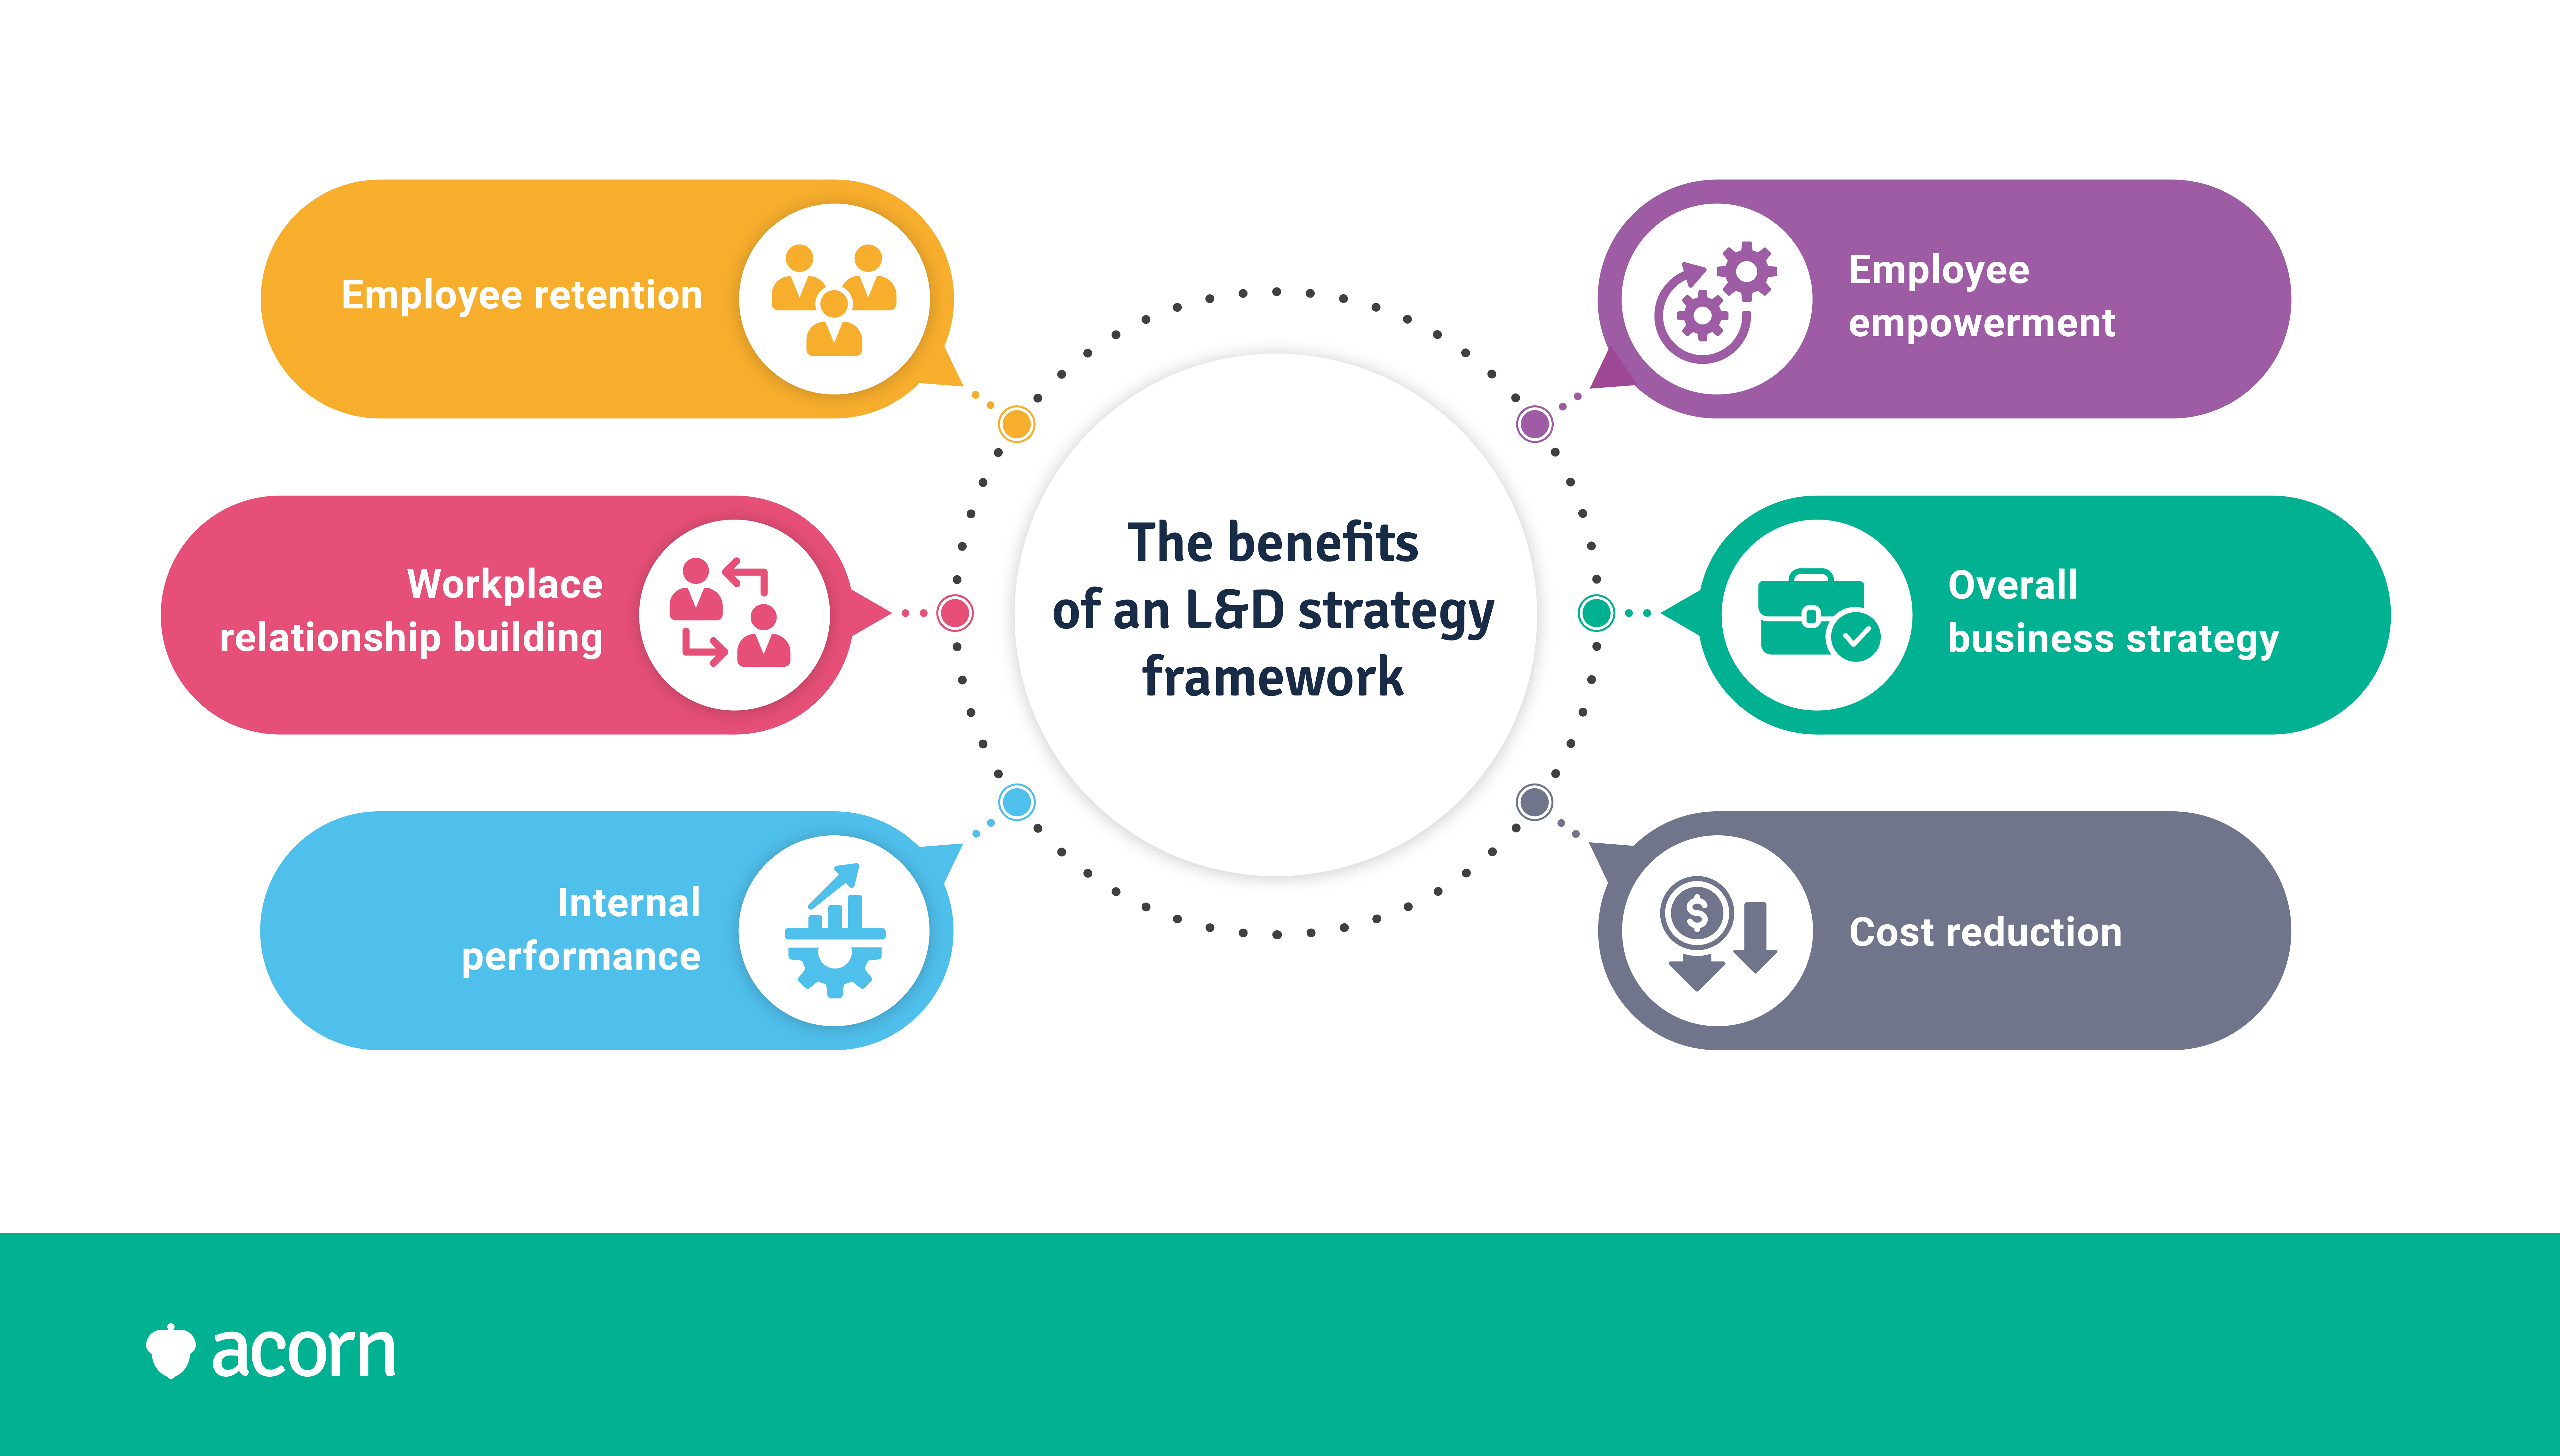 The benefits of an L&D strategy framework